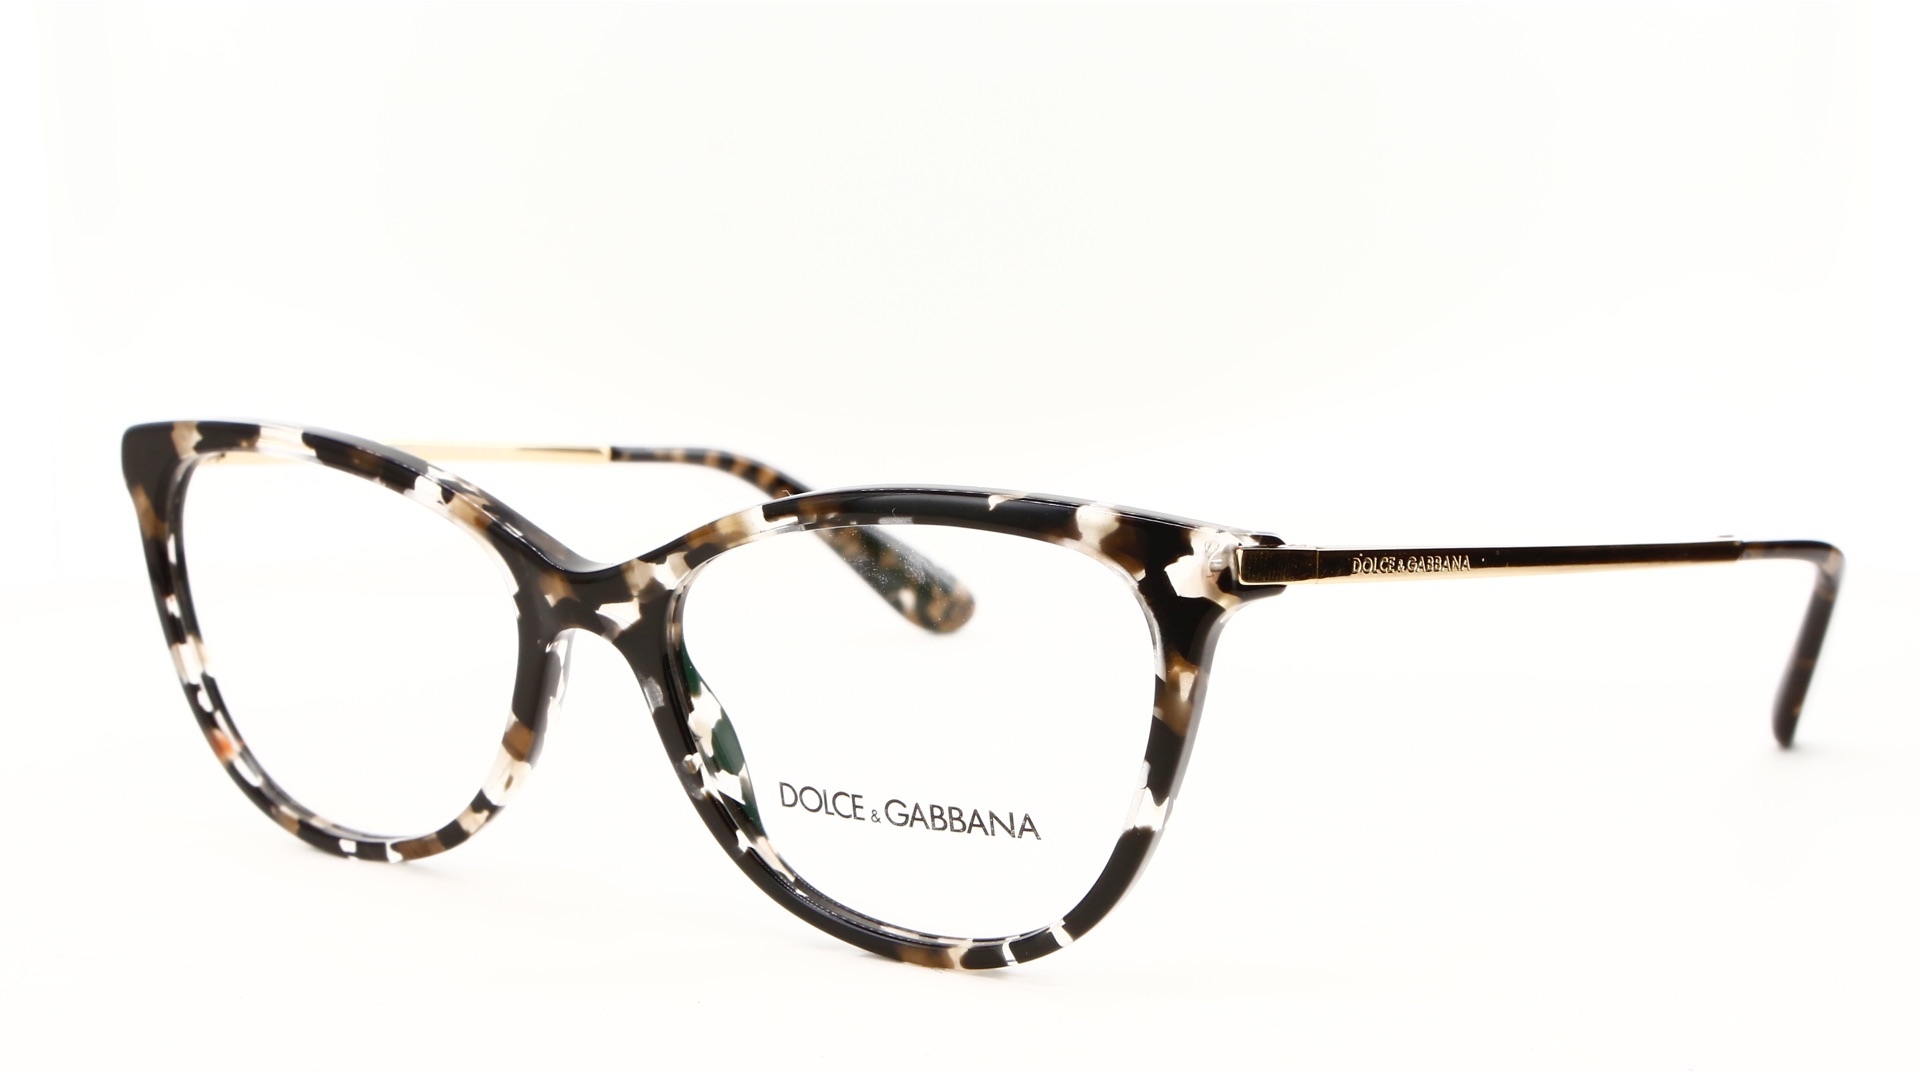 Dolce & Gabbana - ref: 78614